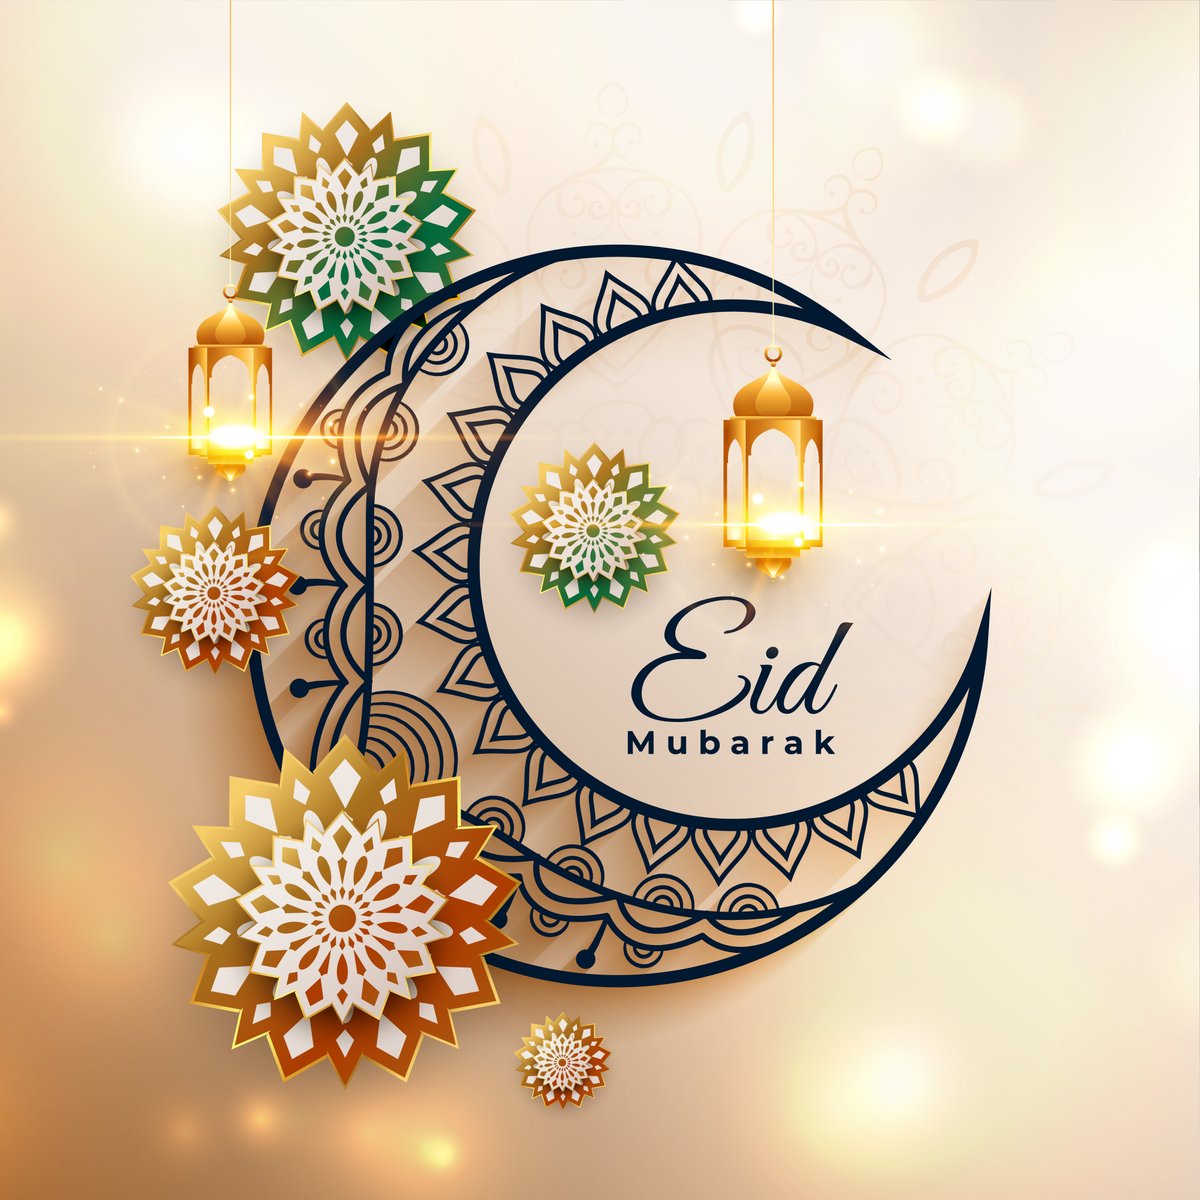 Eid Mubarak! Wishing all that are celebrating a happy Eid.